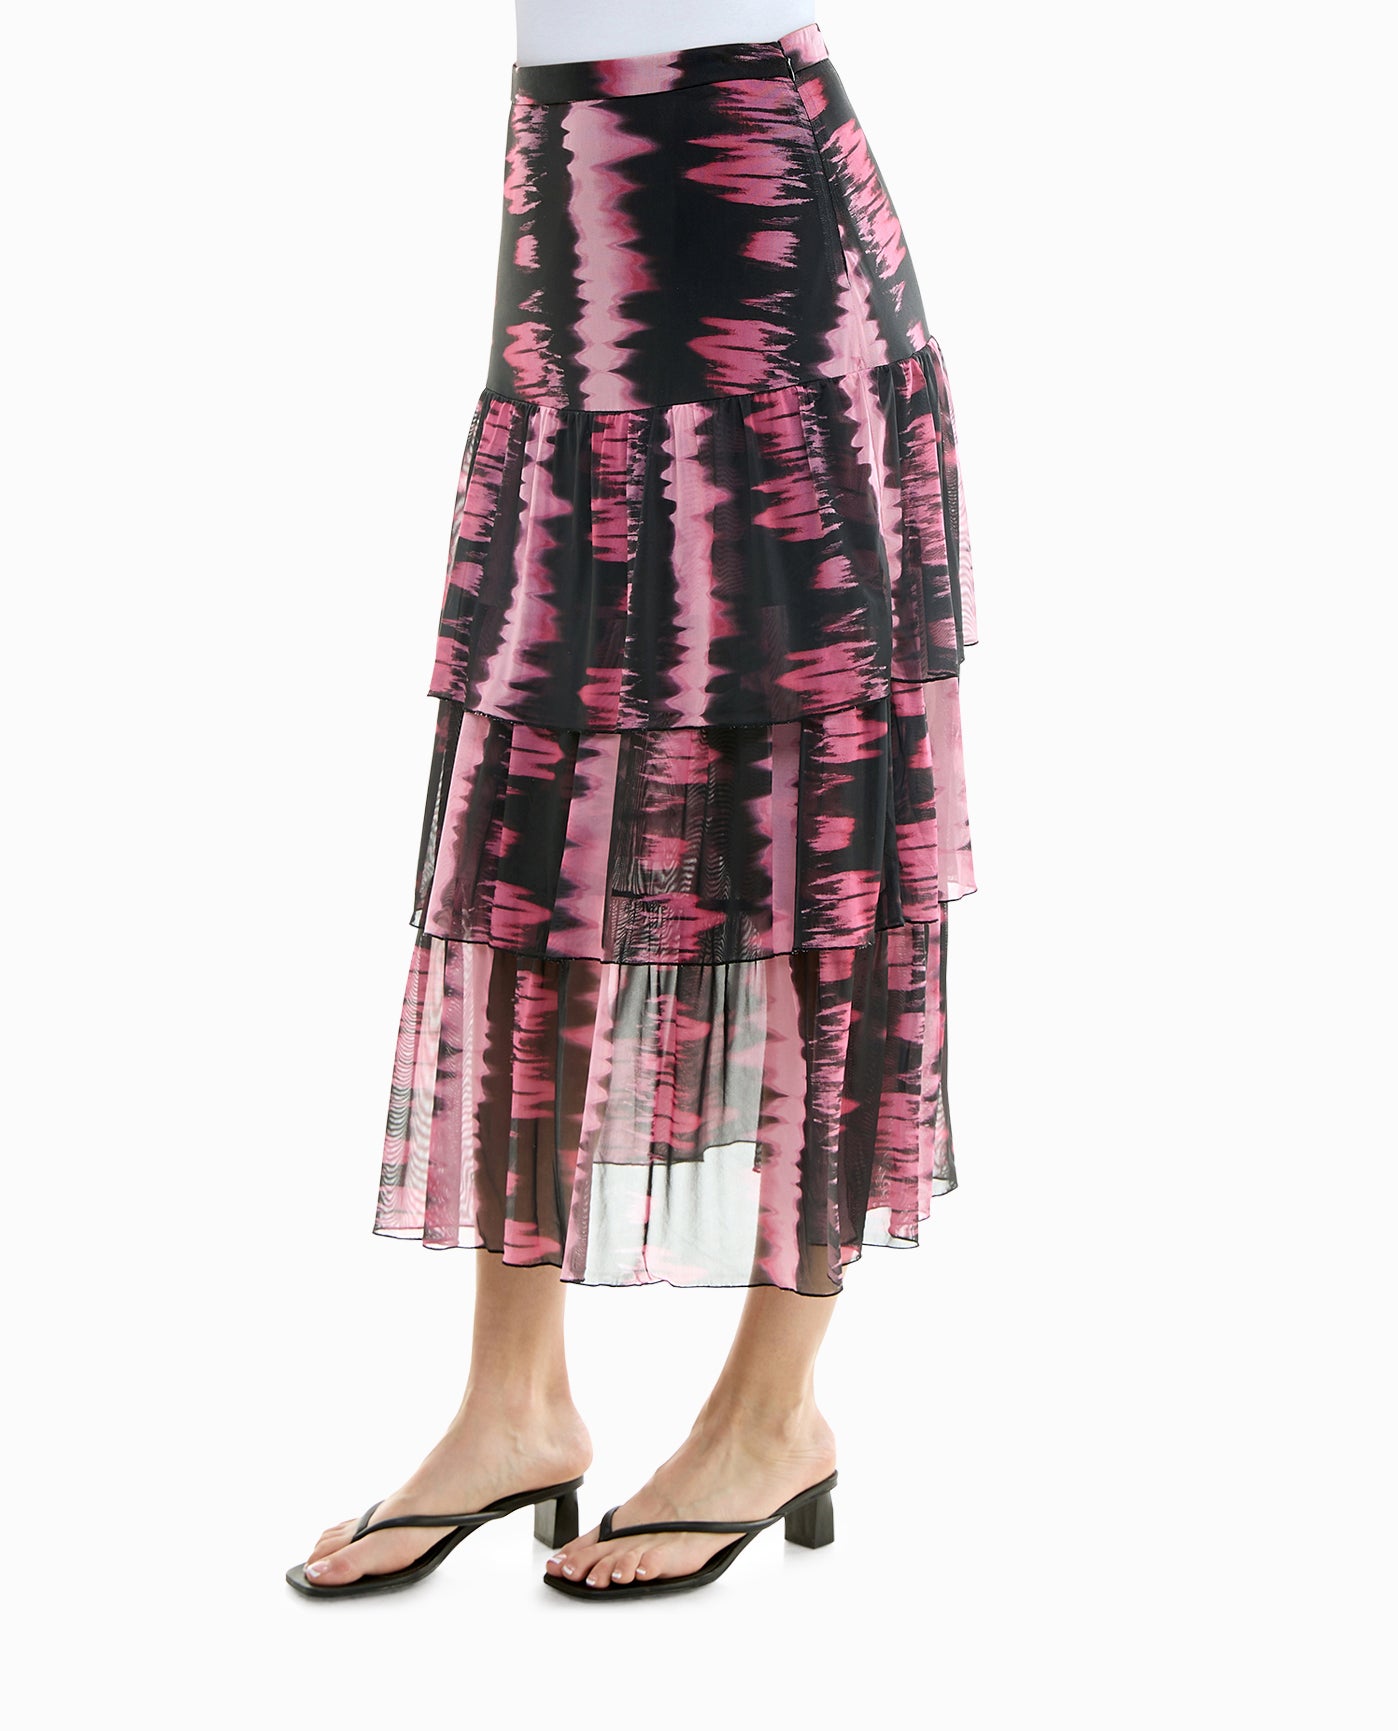 Bluebella Miriam Sheer Mesh Skirt With Hardware And Suspender